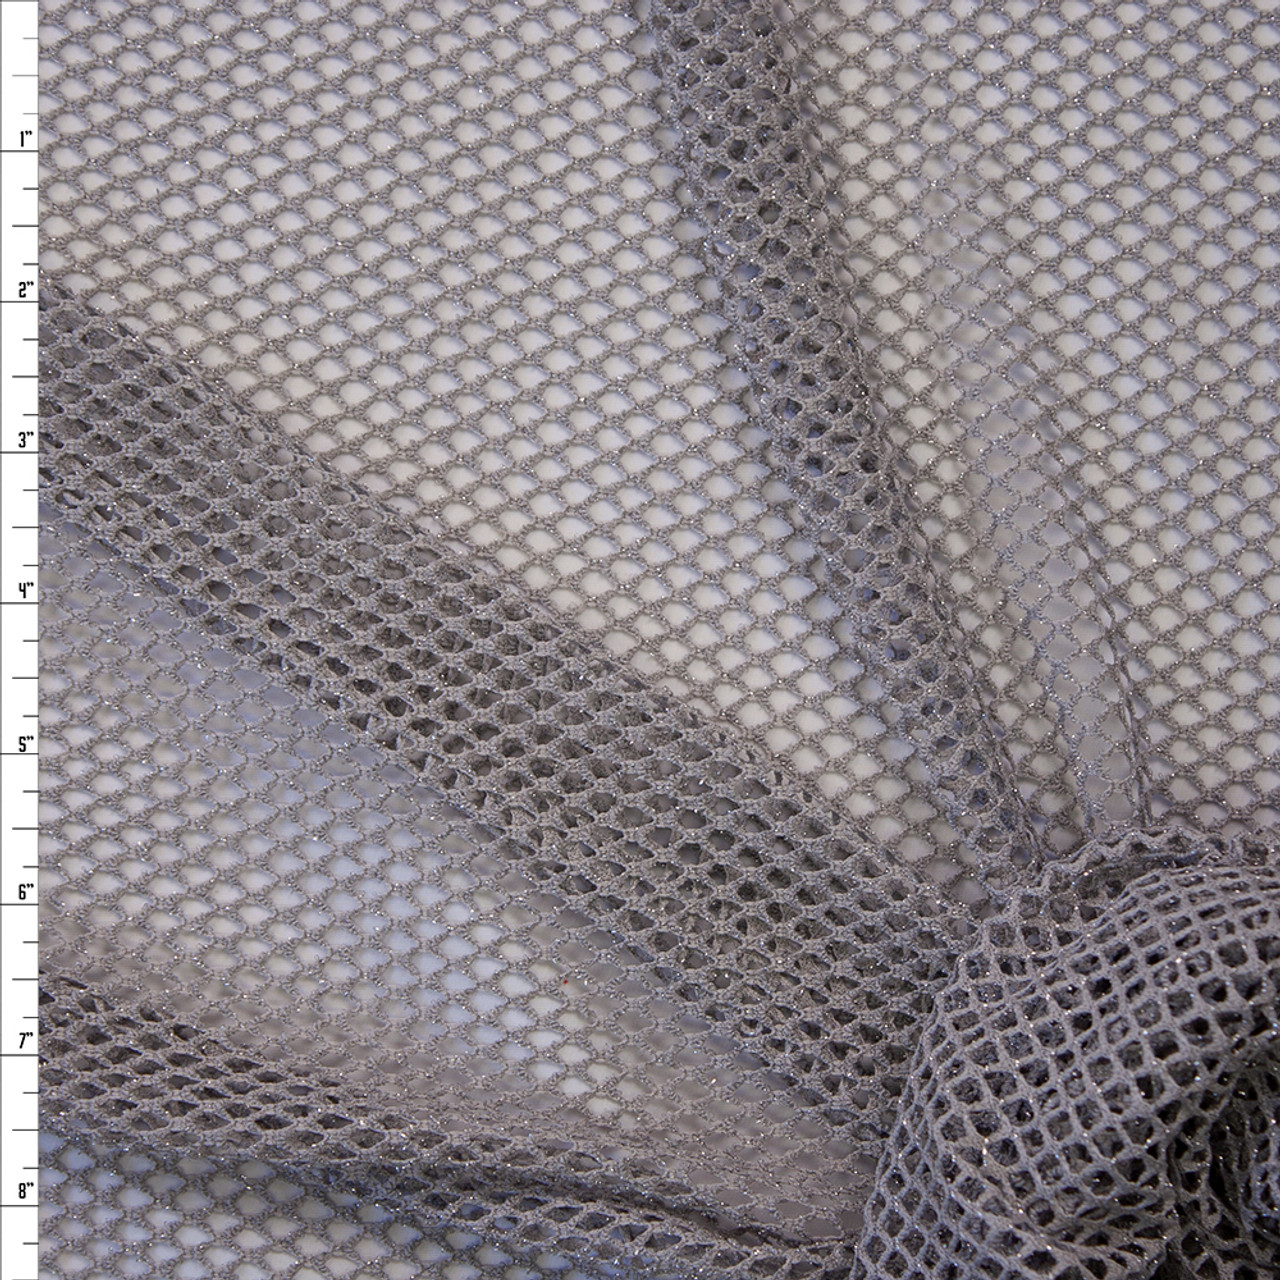 Metallic Silver on Grey Fishnet